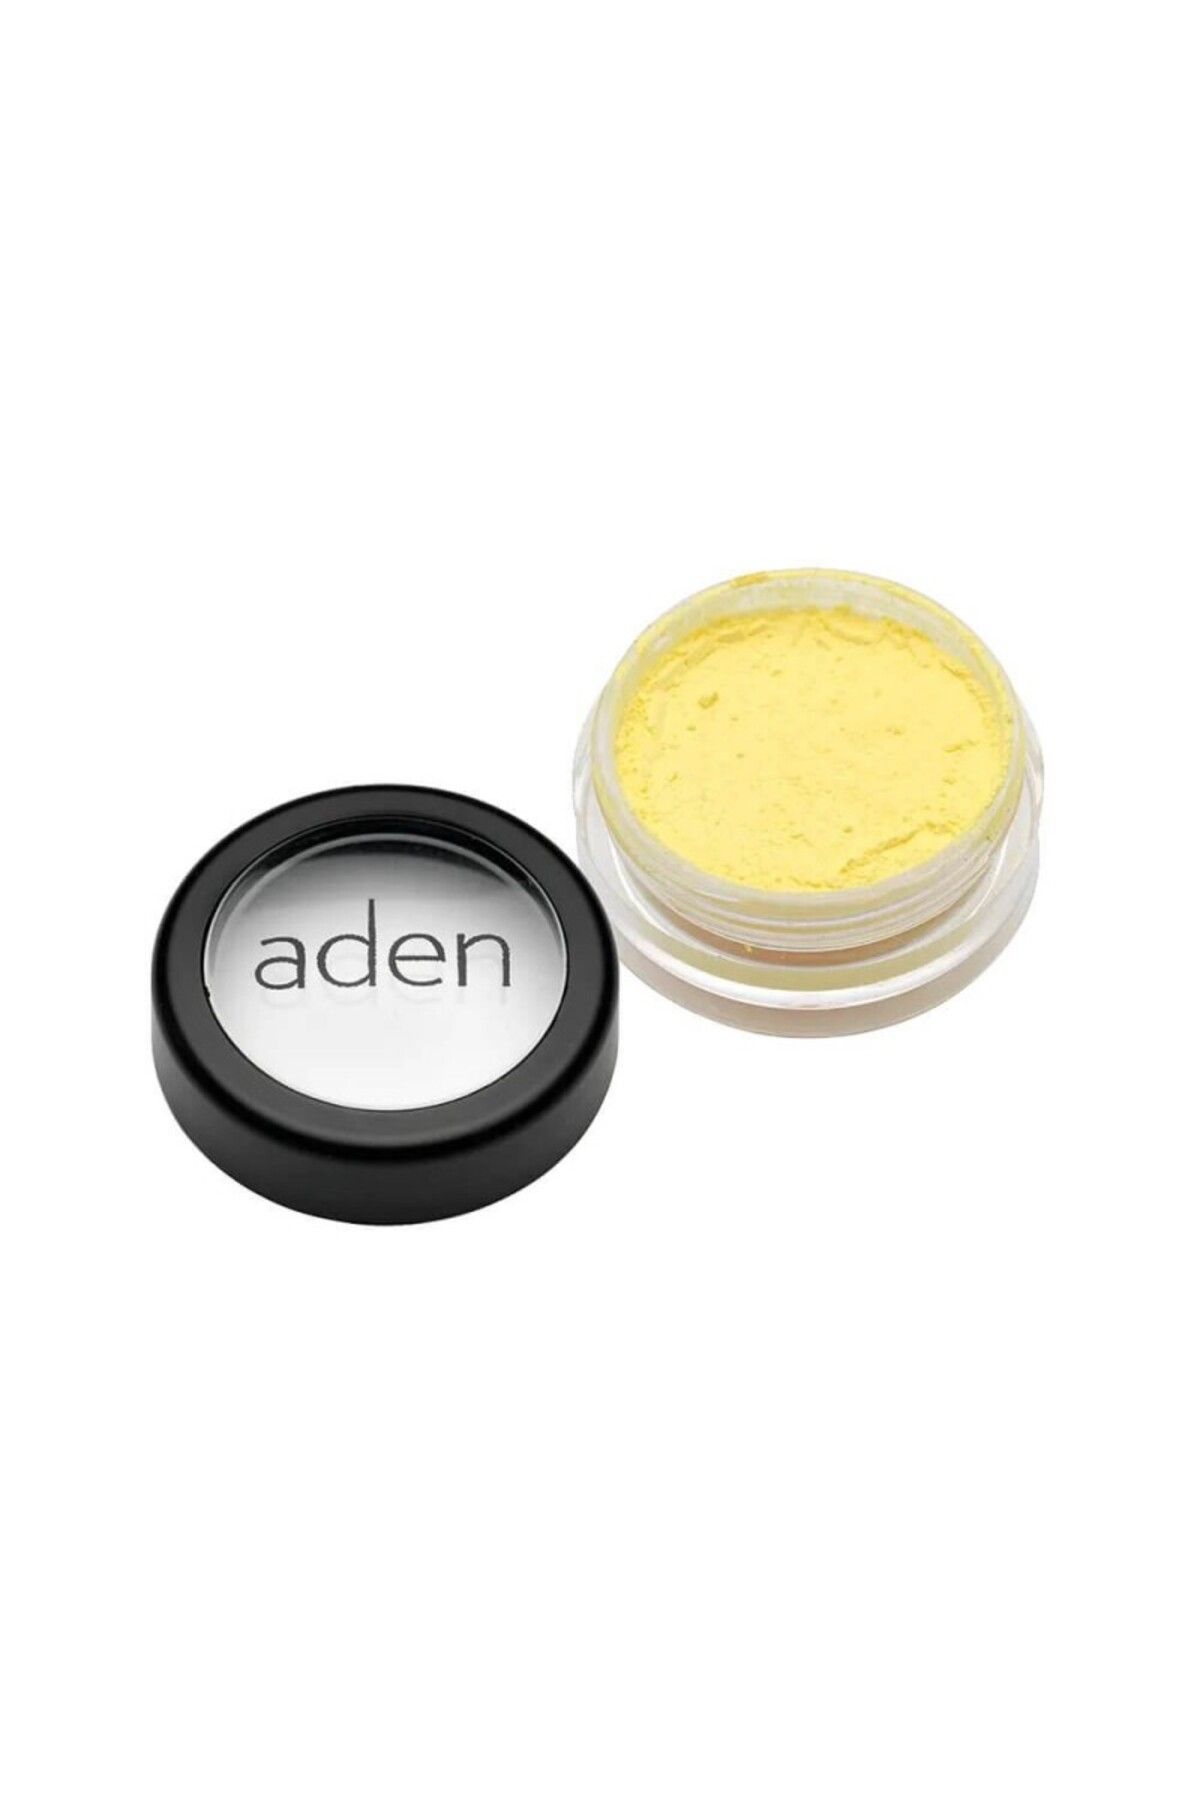 Aden Pigment Powder ( 31 Neon Yellow )